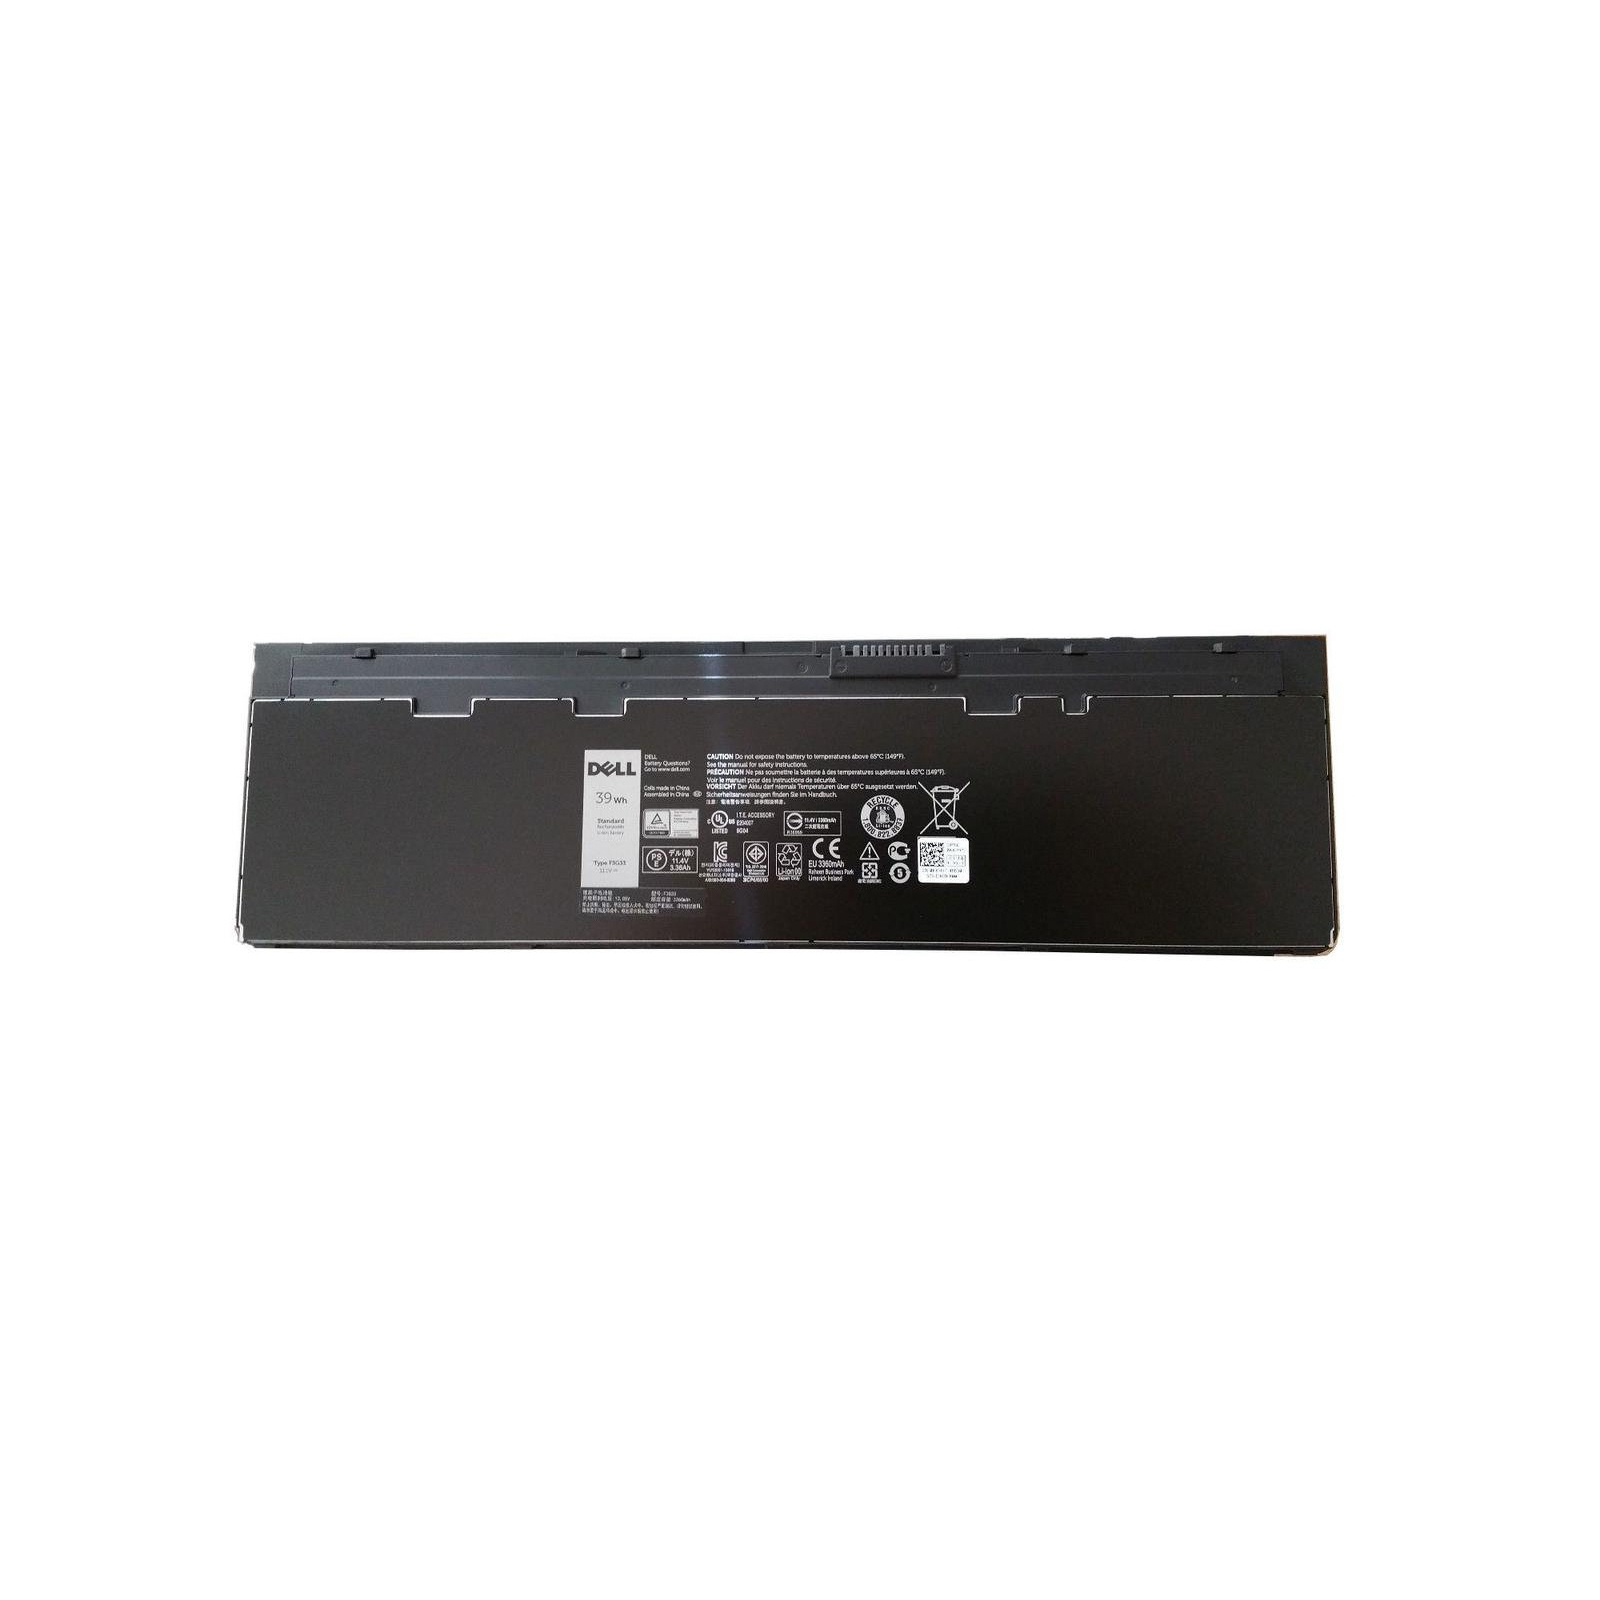 Аккумулятор для ноутбука Dell Latitude E7250 F3G33, 3360mAh (39Wh), 3cell, 11.1V, Li-ion, (A47197)